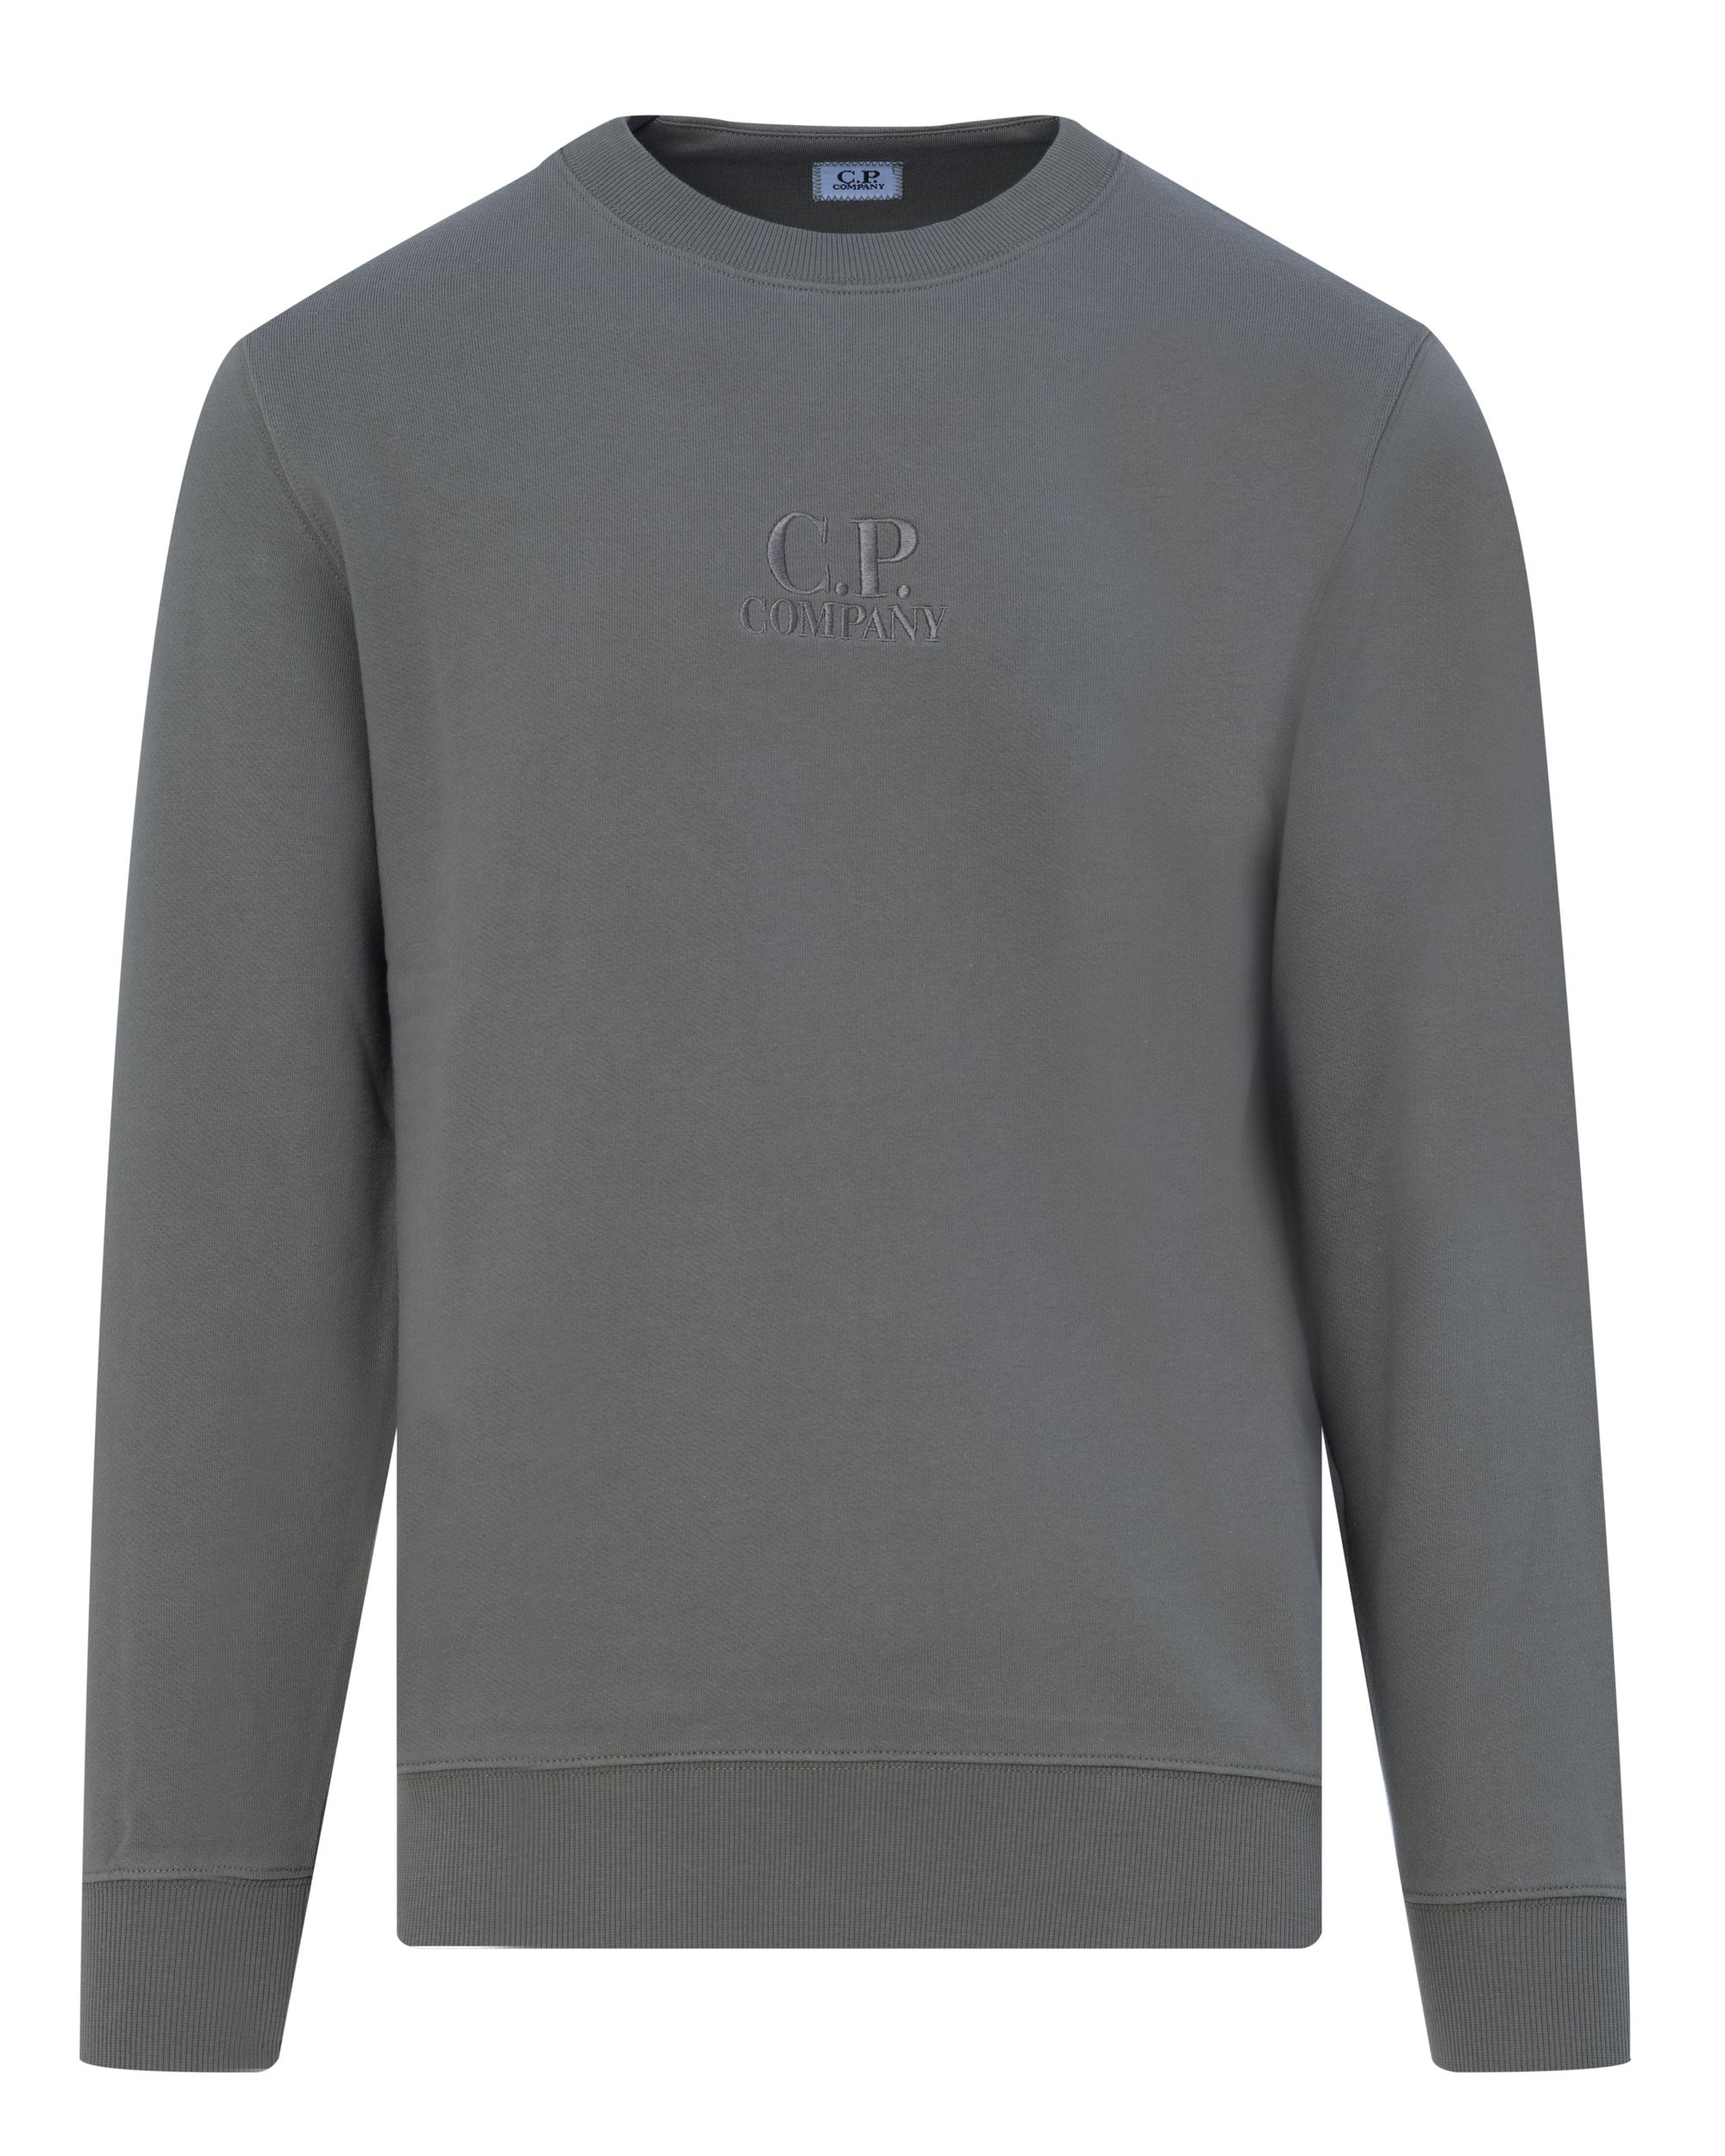 C.P Company Sweater Groen 082132-001-L